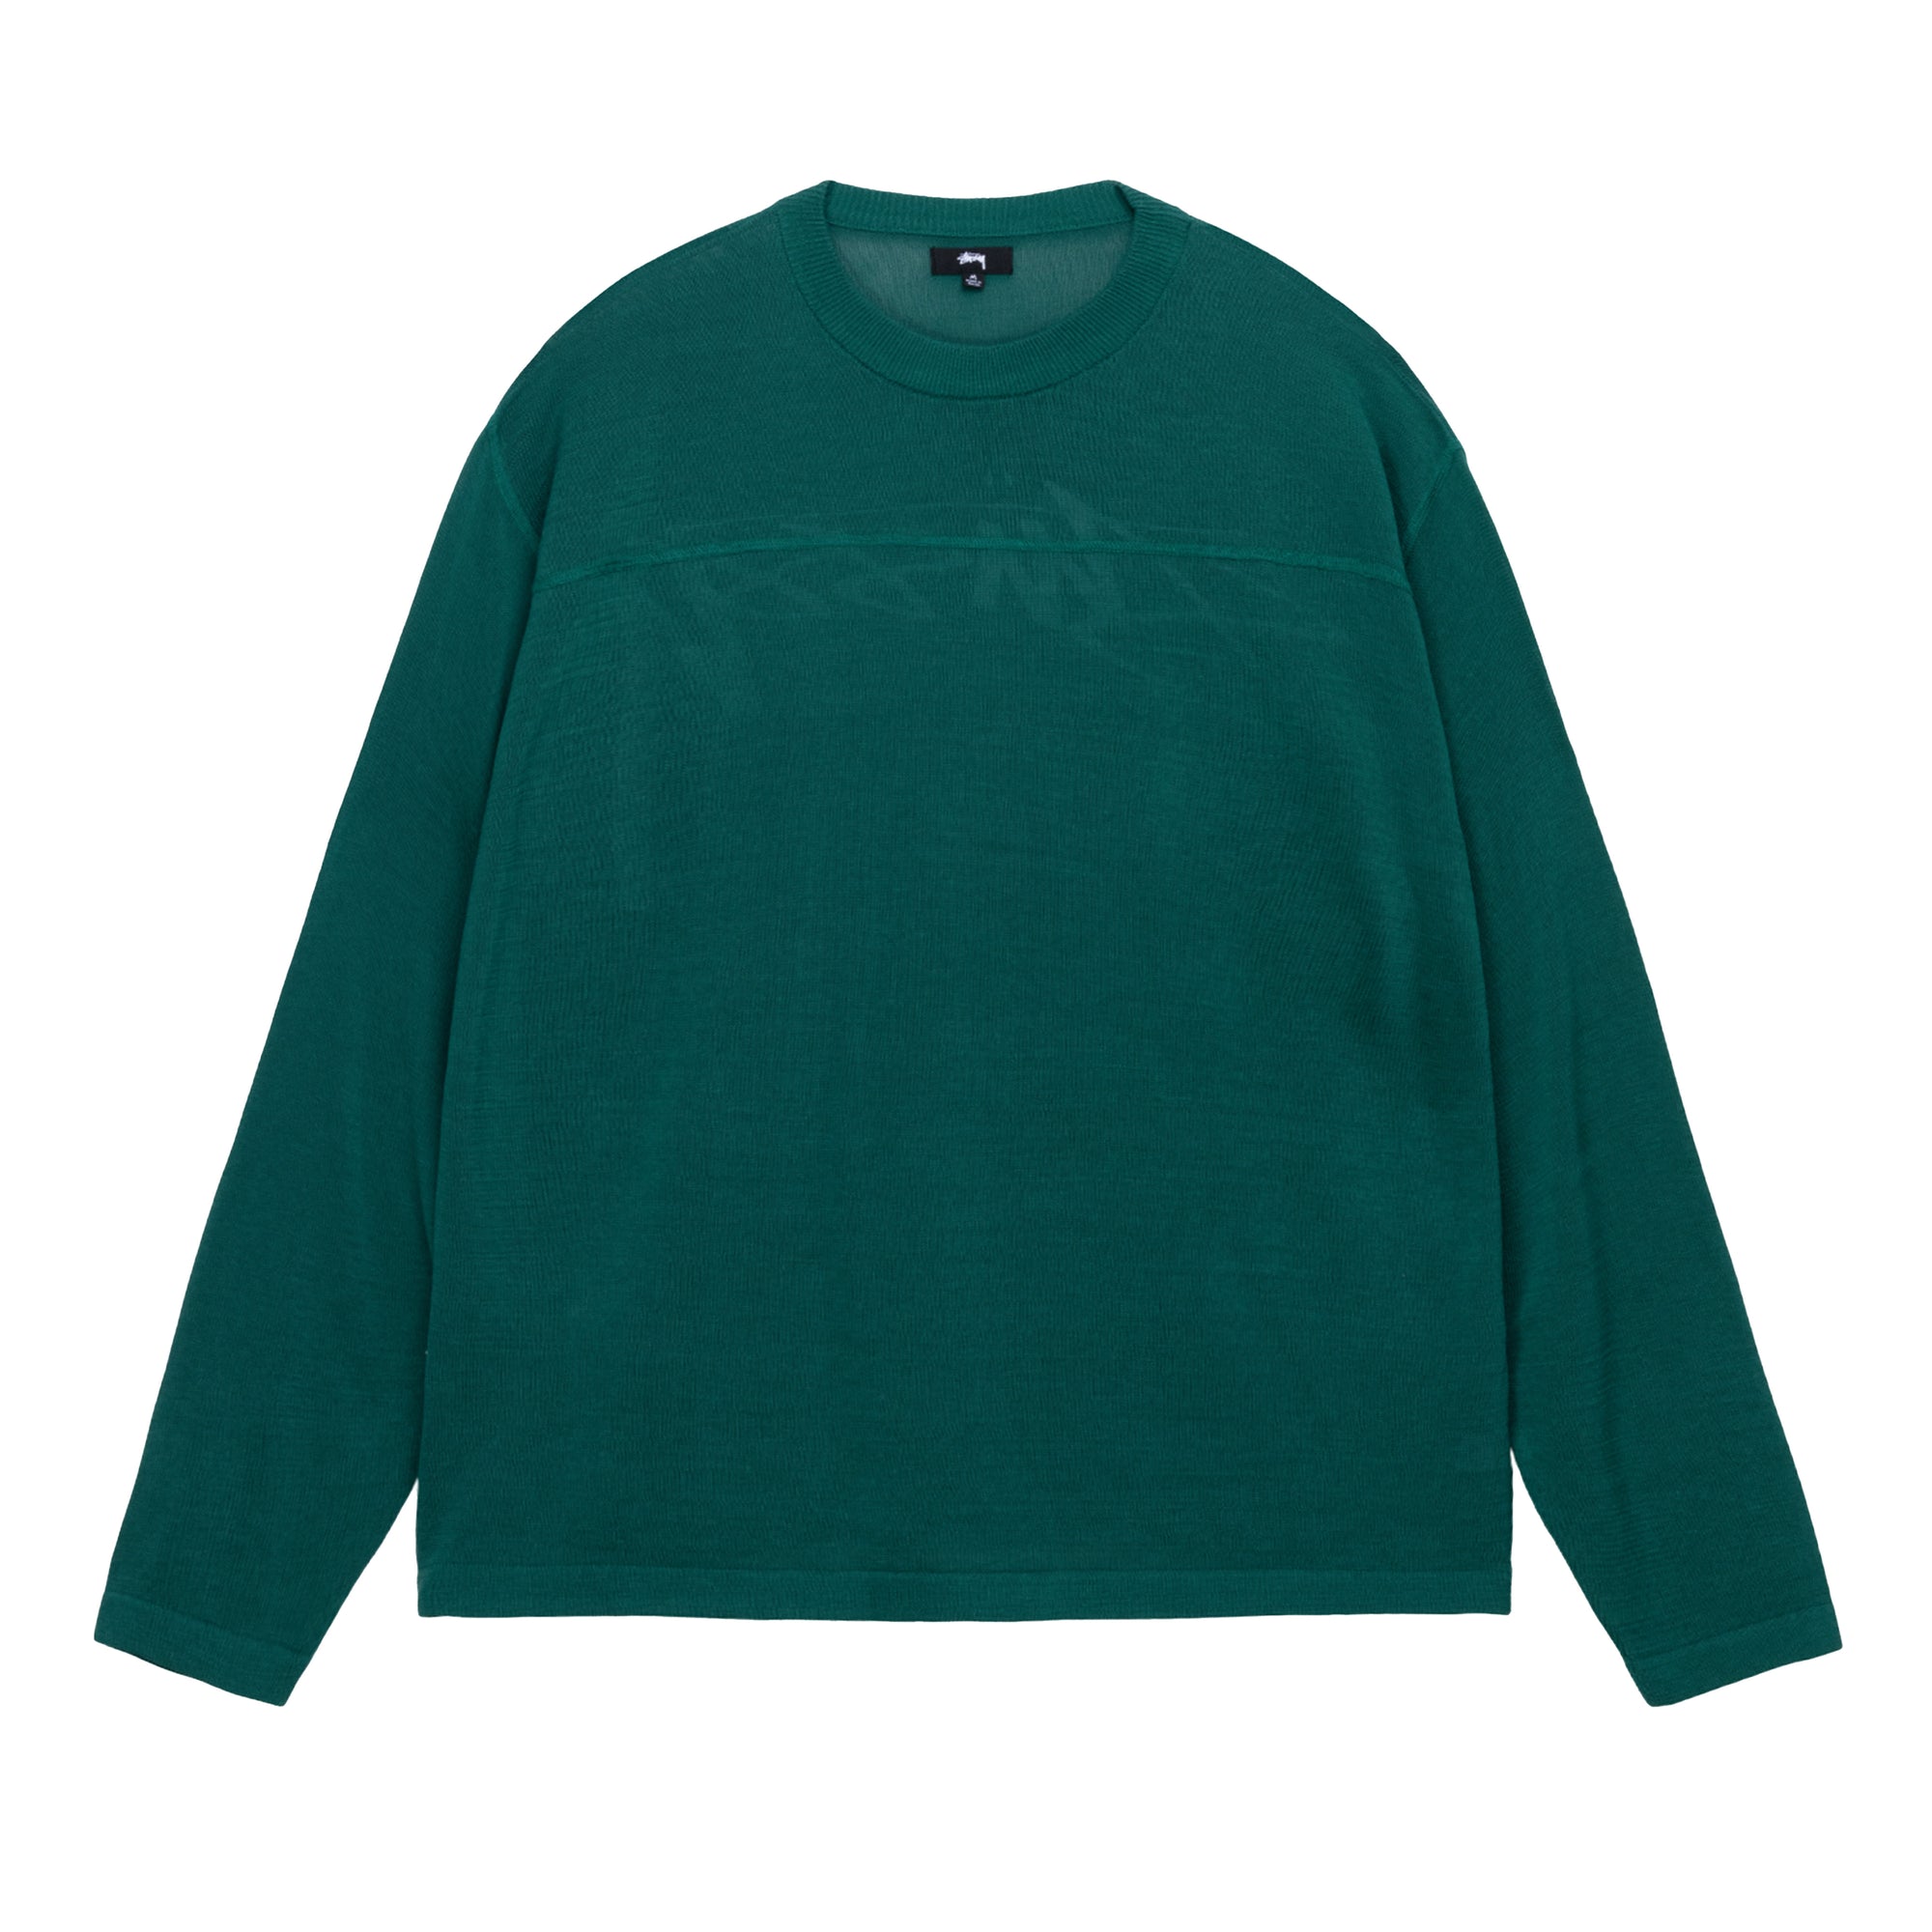 Stüssy - Football Sweater - (Green) view 1